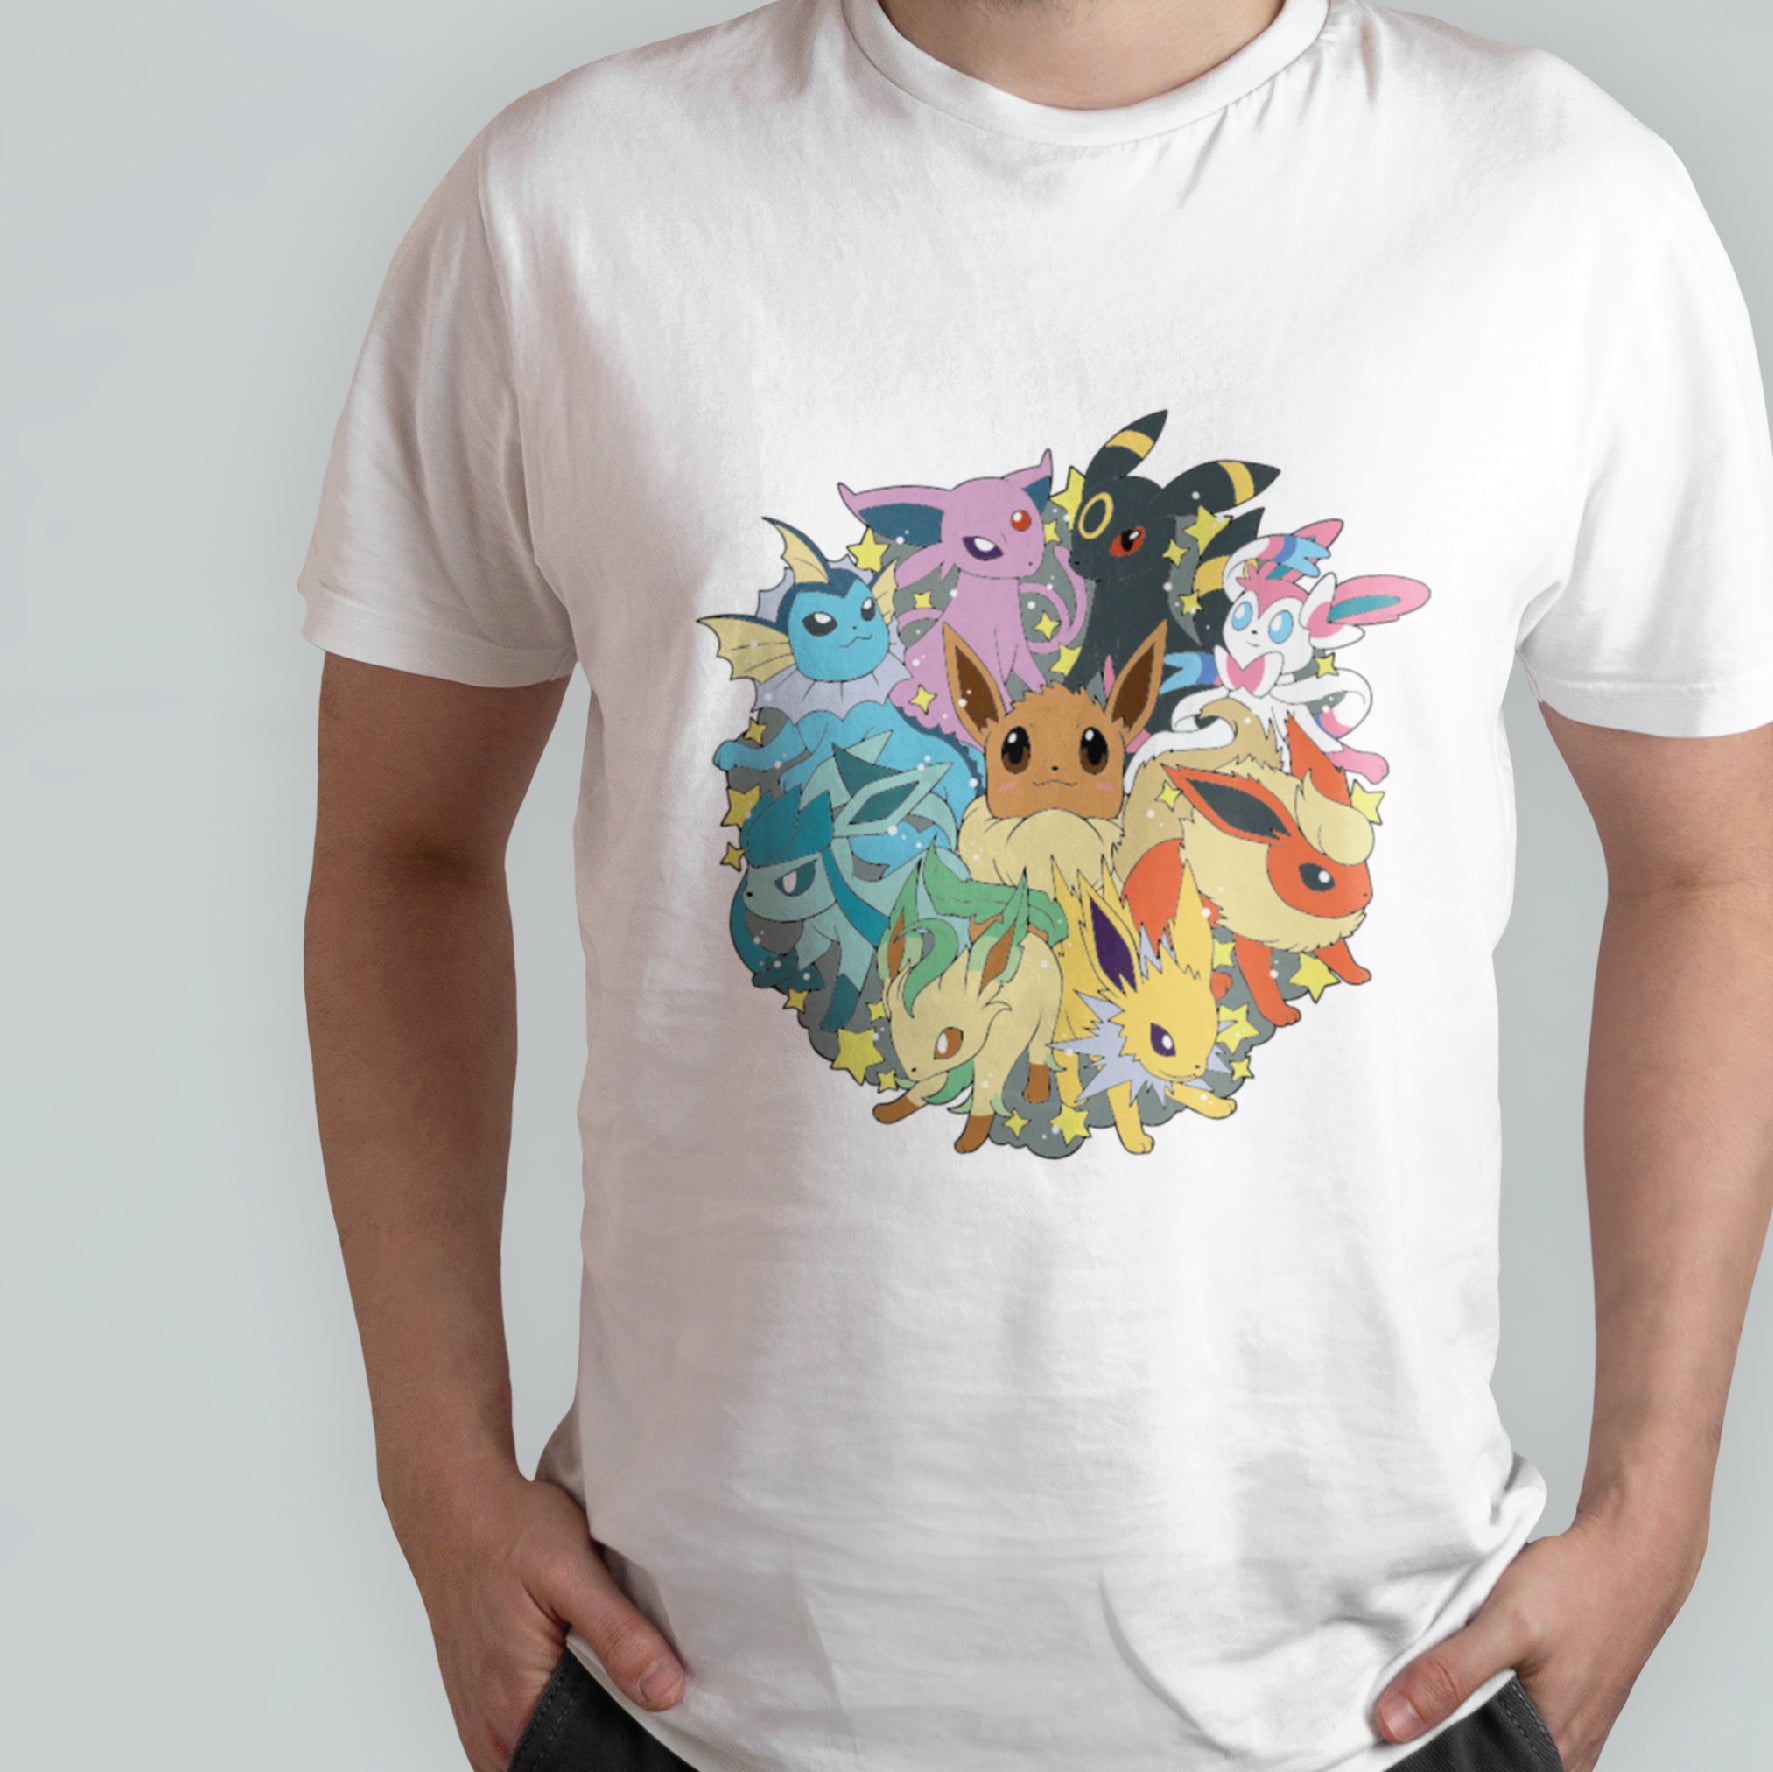 Eeveelution T-Shirt - Pokemon T-Shirt Collection White T-Shirt / M